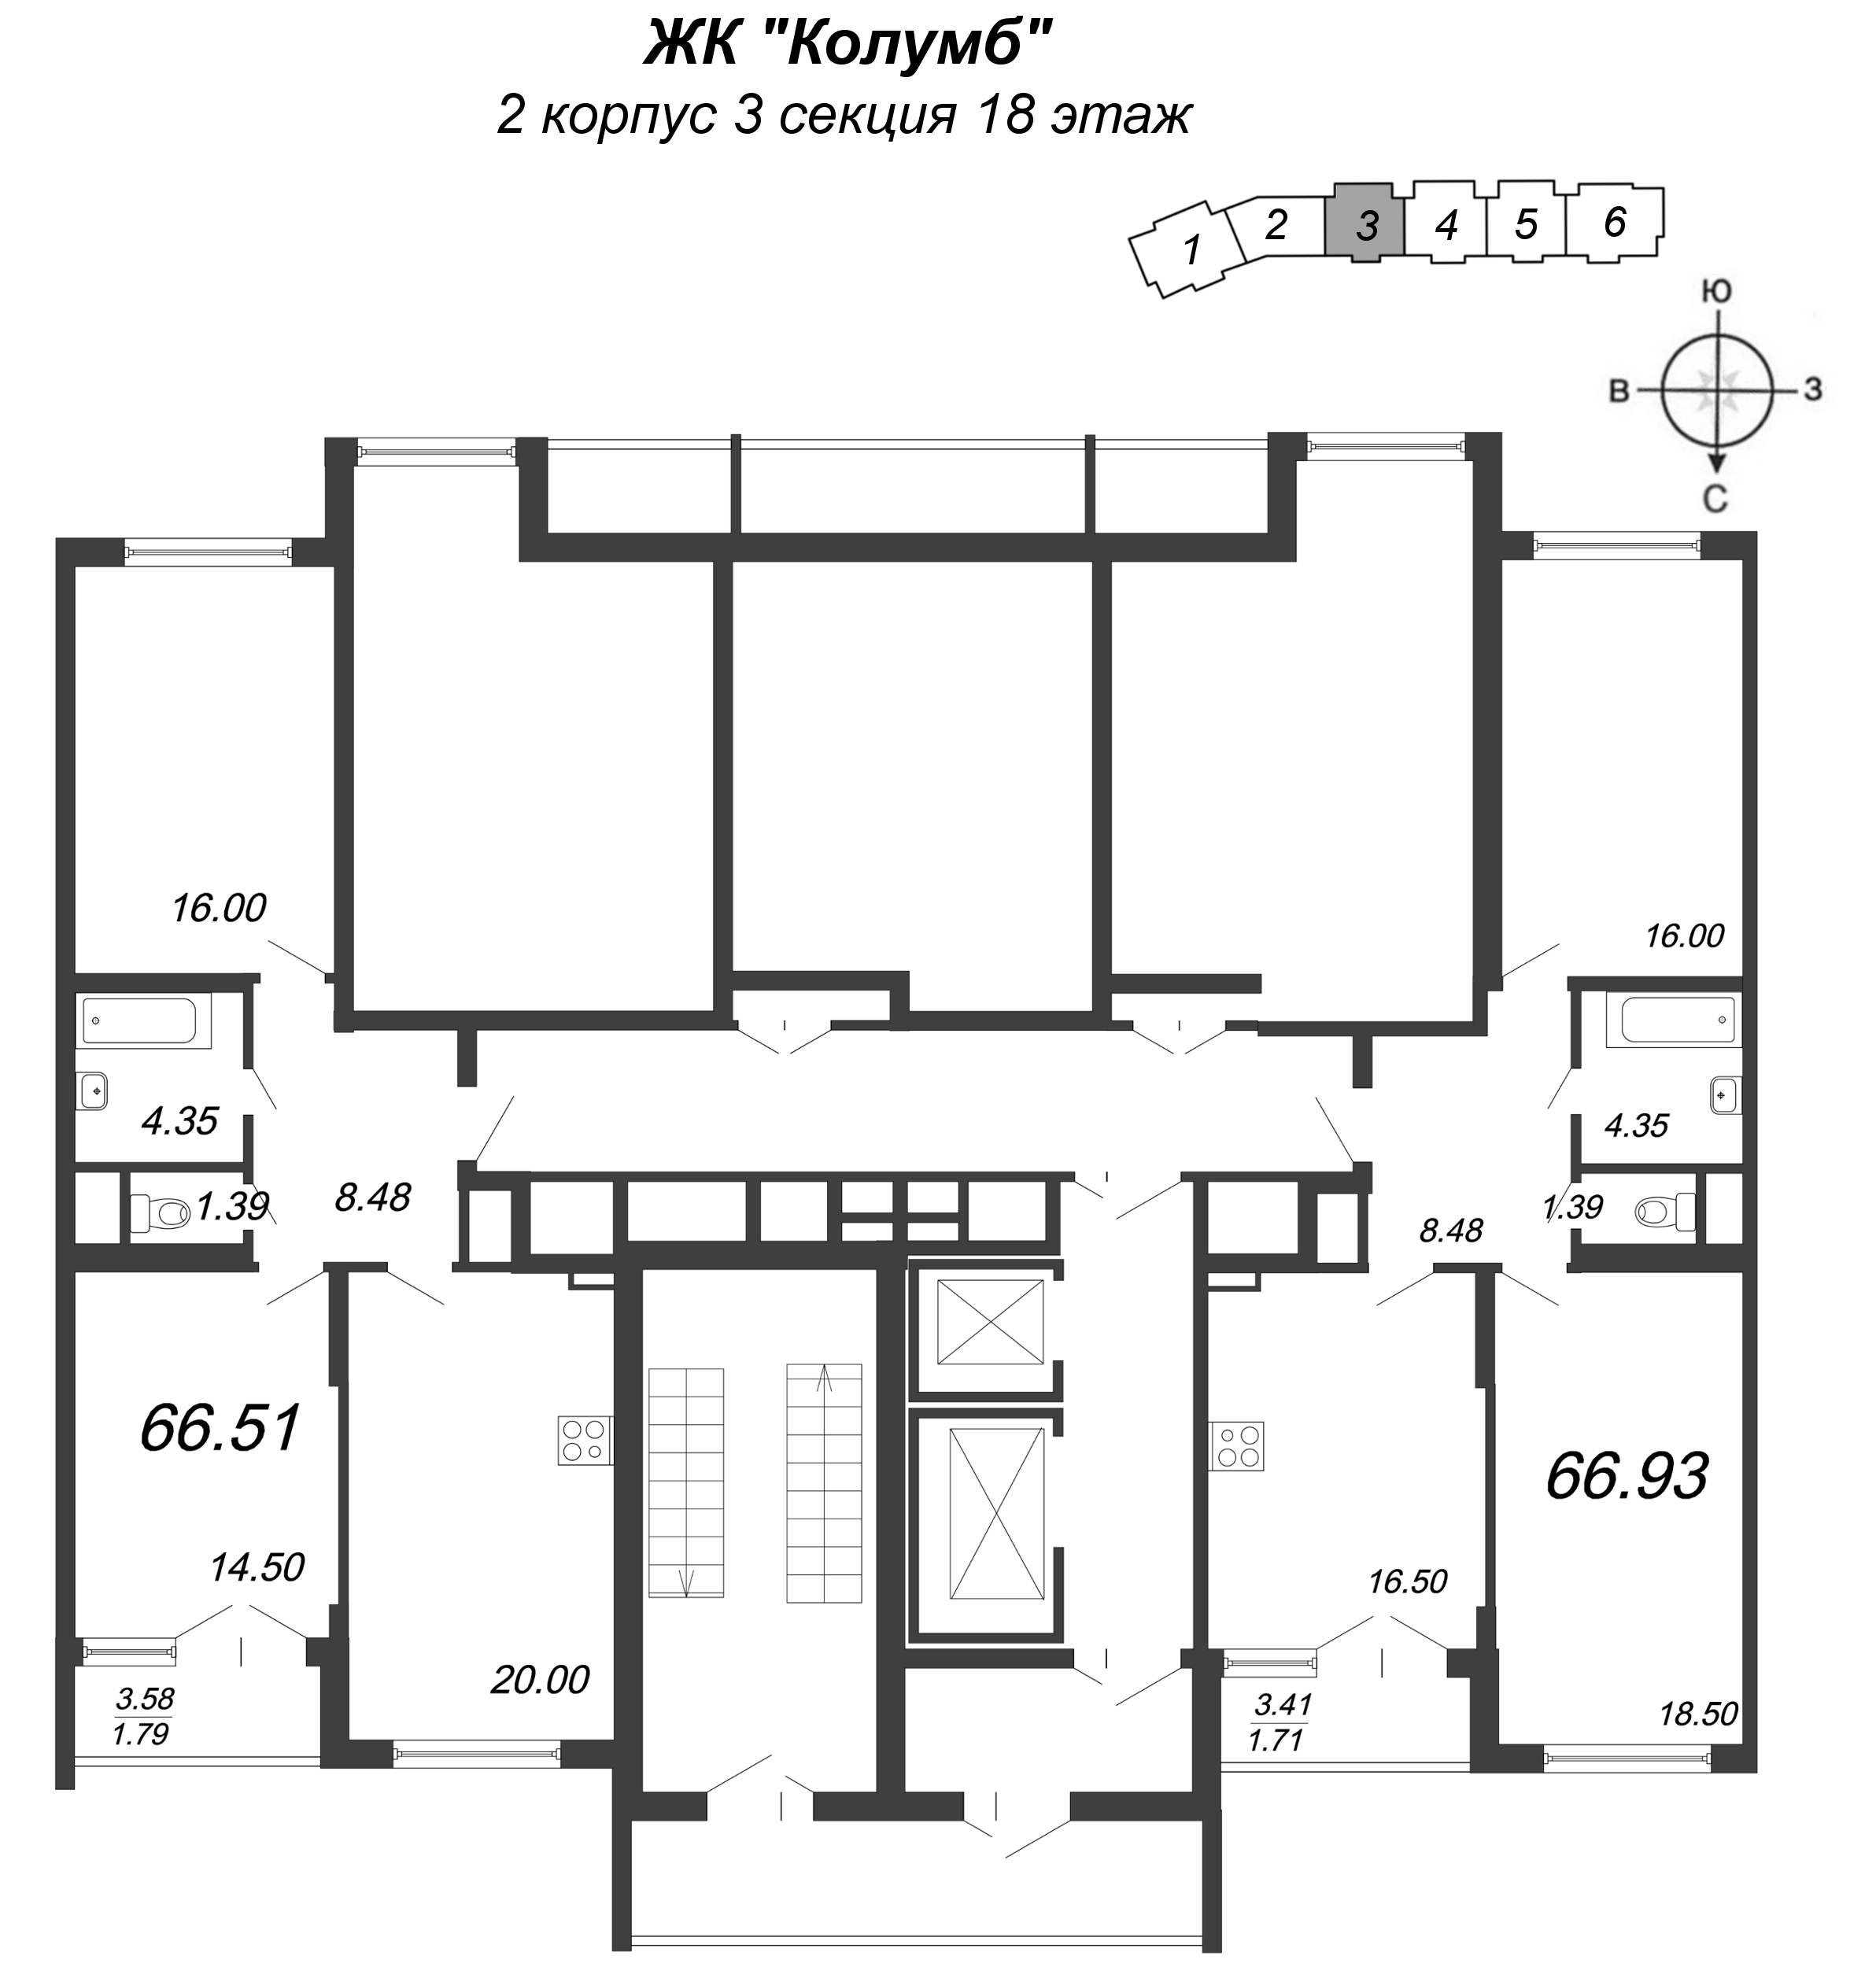 3-комнатная (Евро) квартира, 67.8 м² - планировка этажа